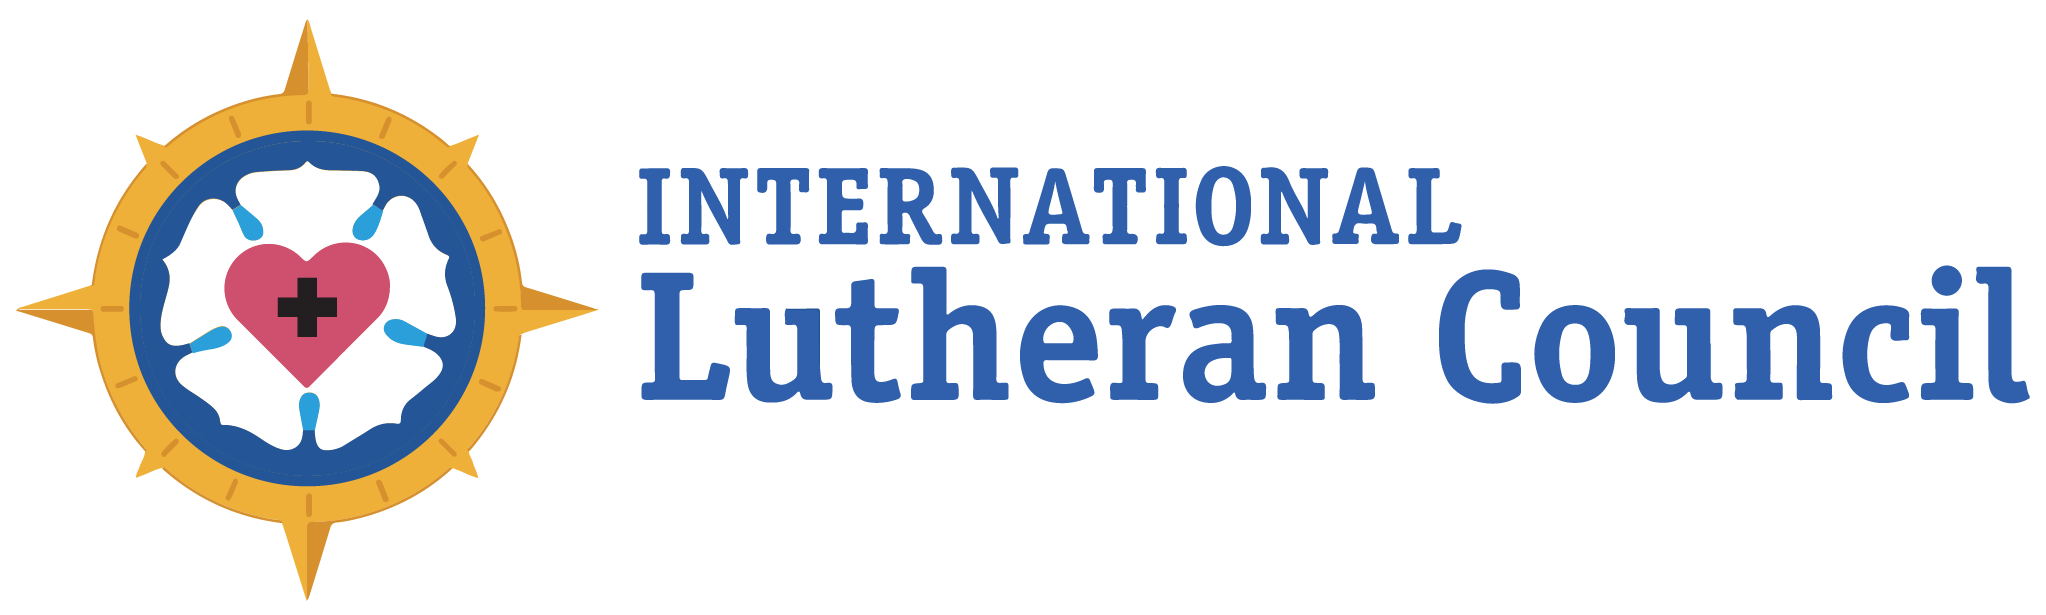 International Lutheran Council (ILC)